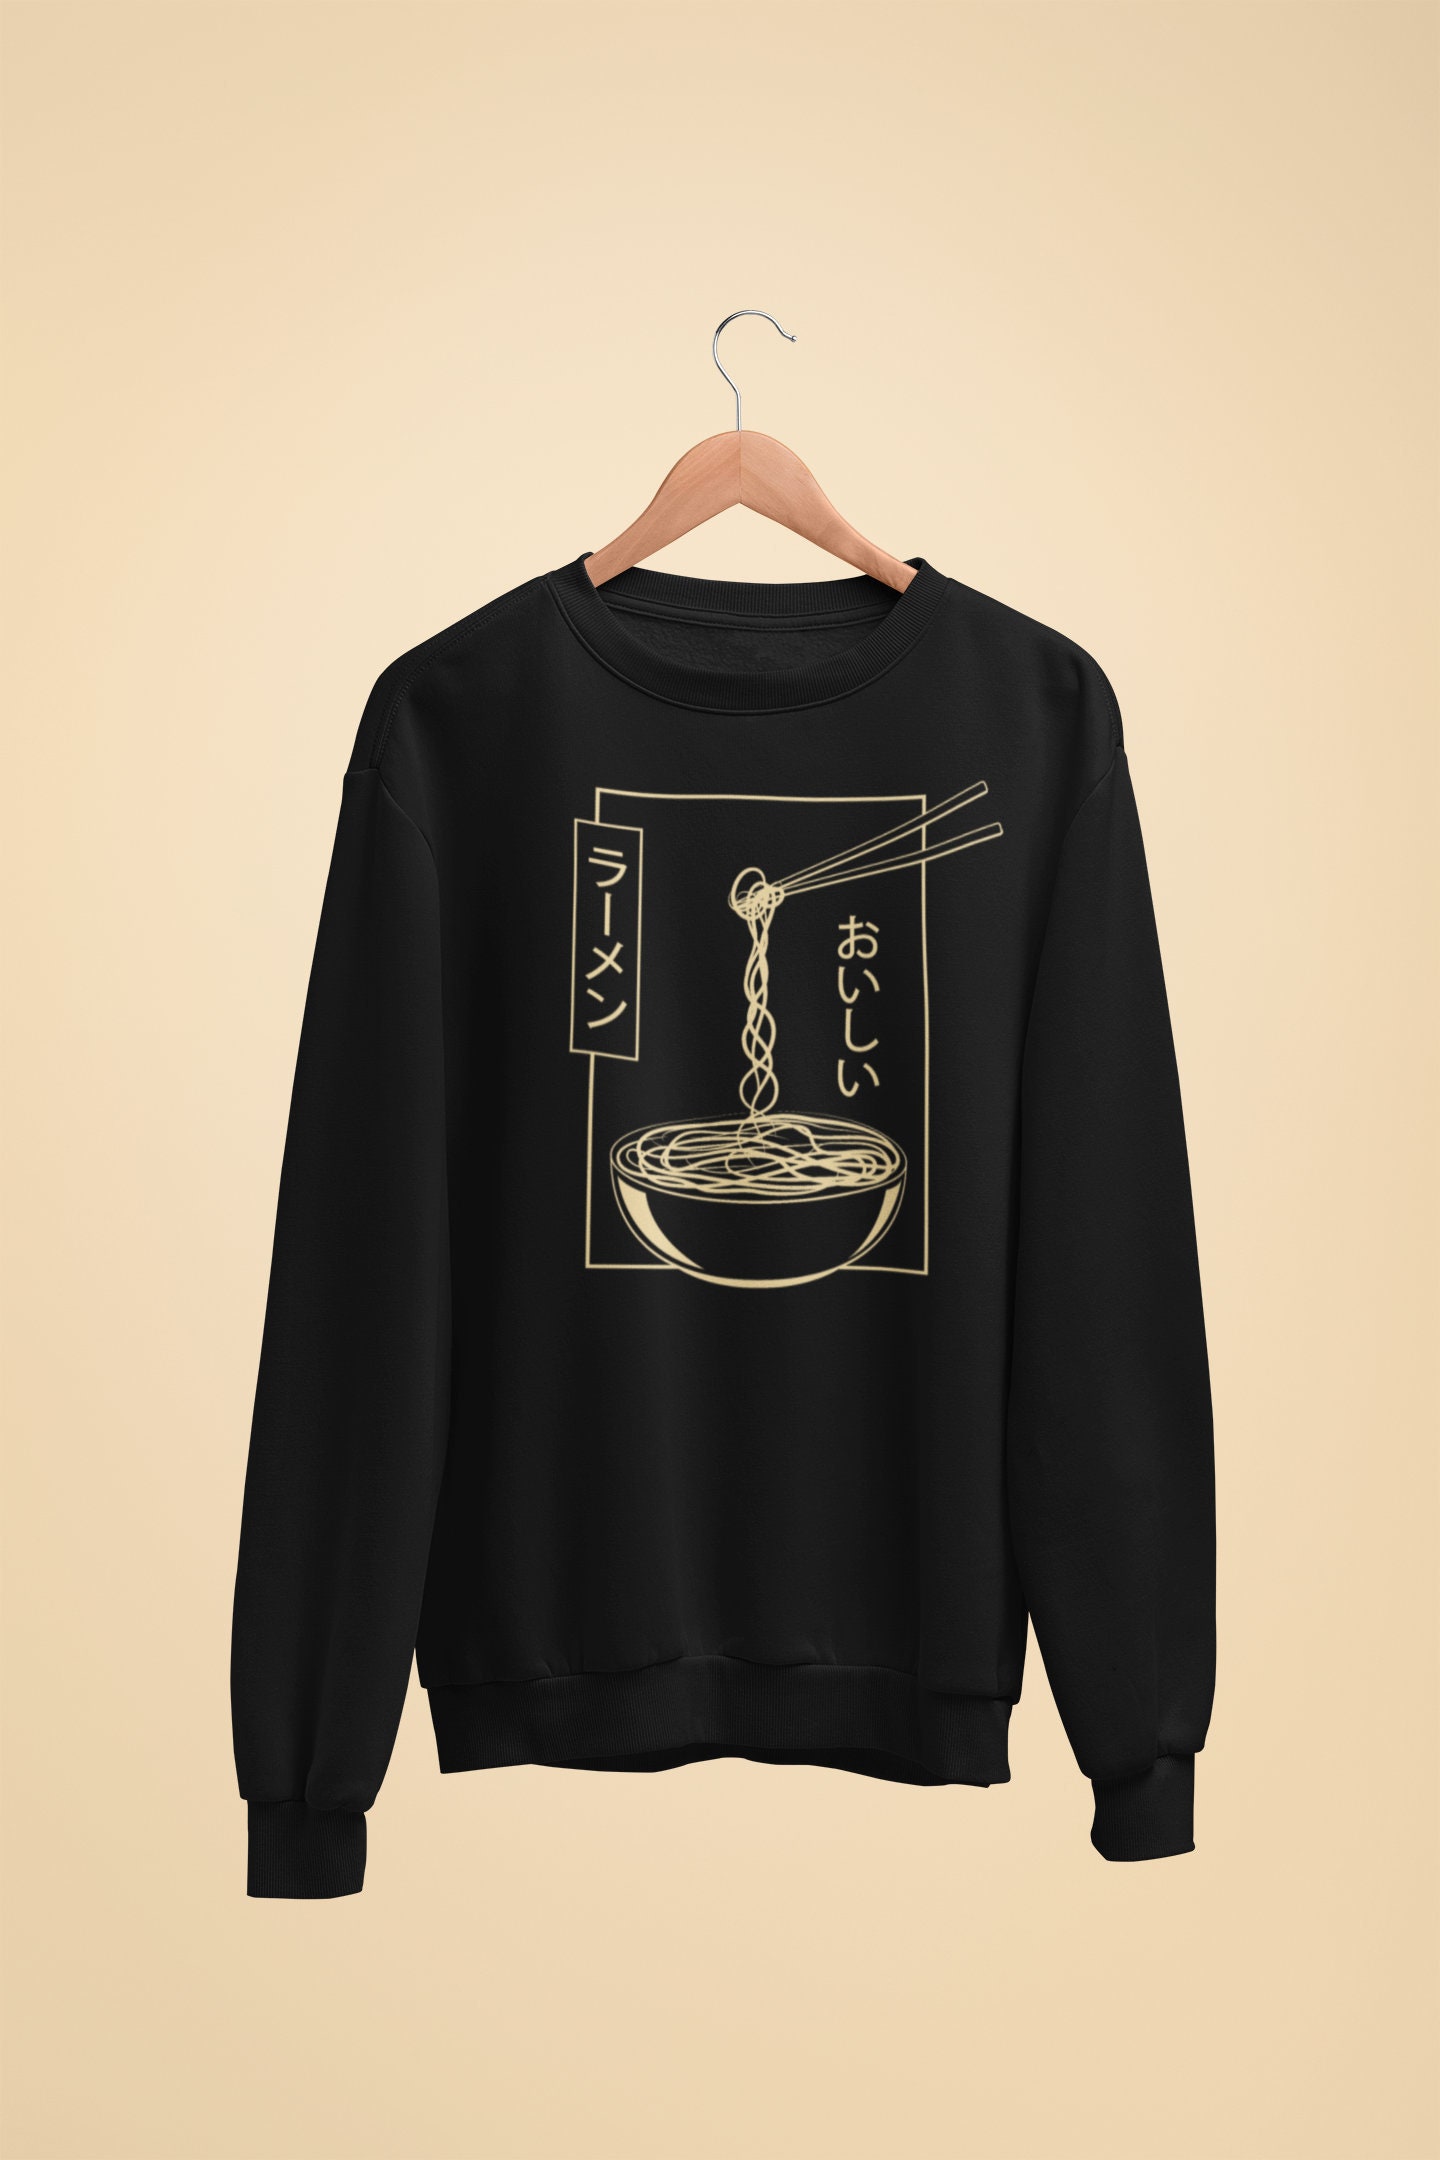 Ramen Bowl Sweatshirt, Noodles, Japanese Aesthetic Sweatshirt Unisex Heavy Blend Crewneck